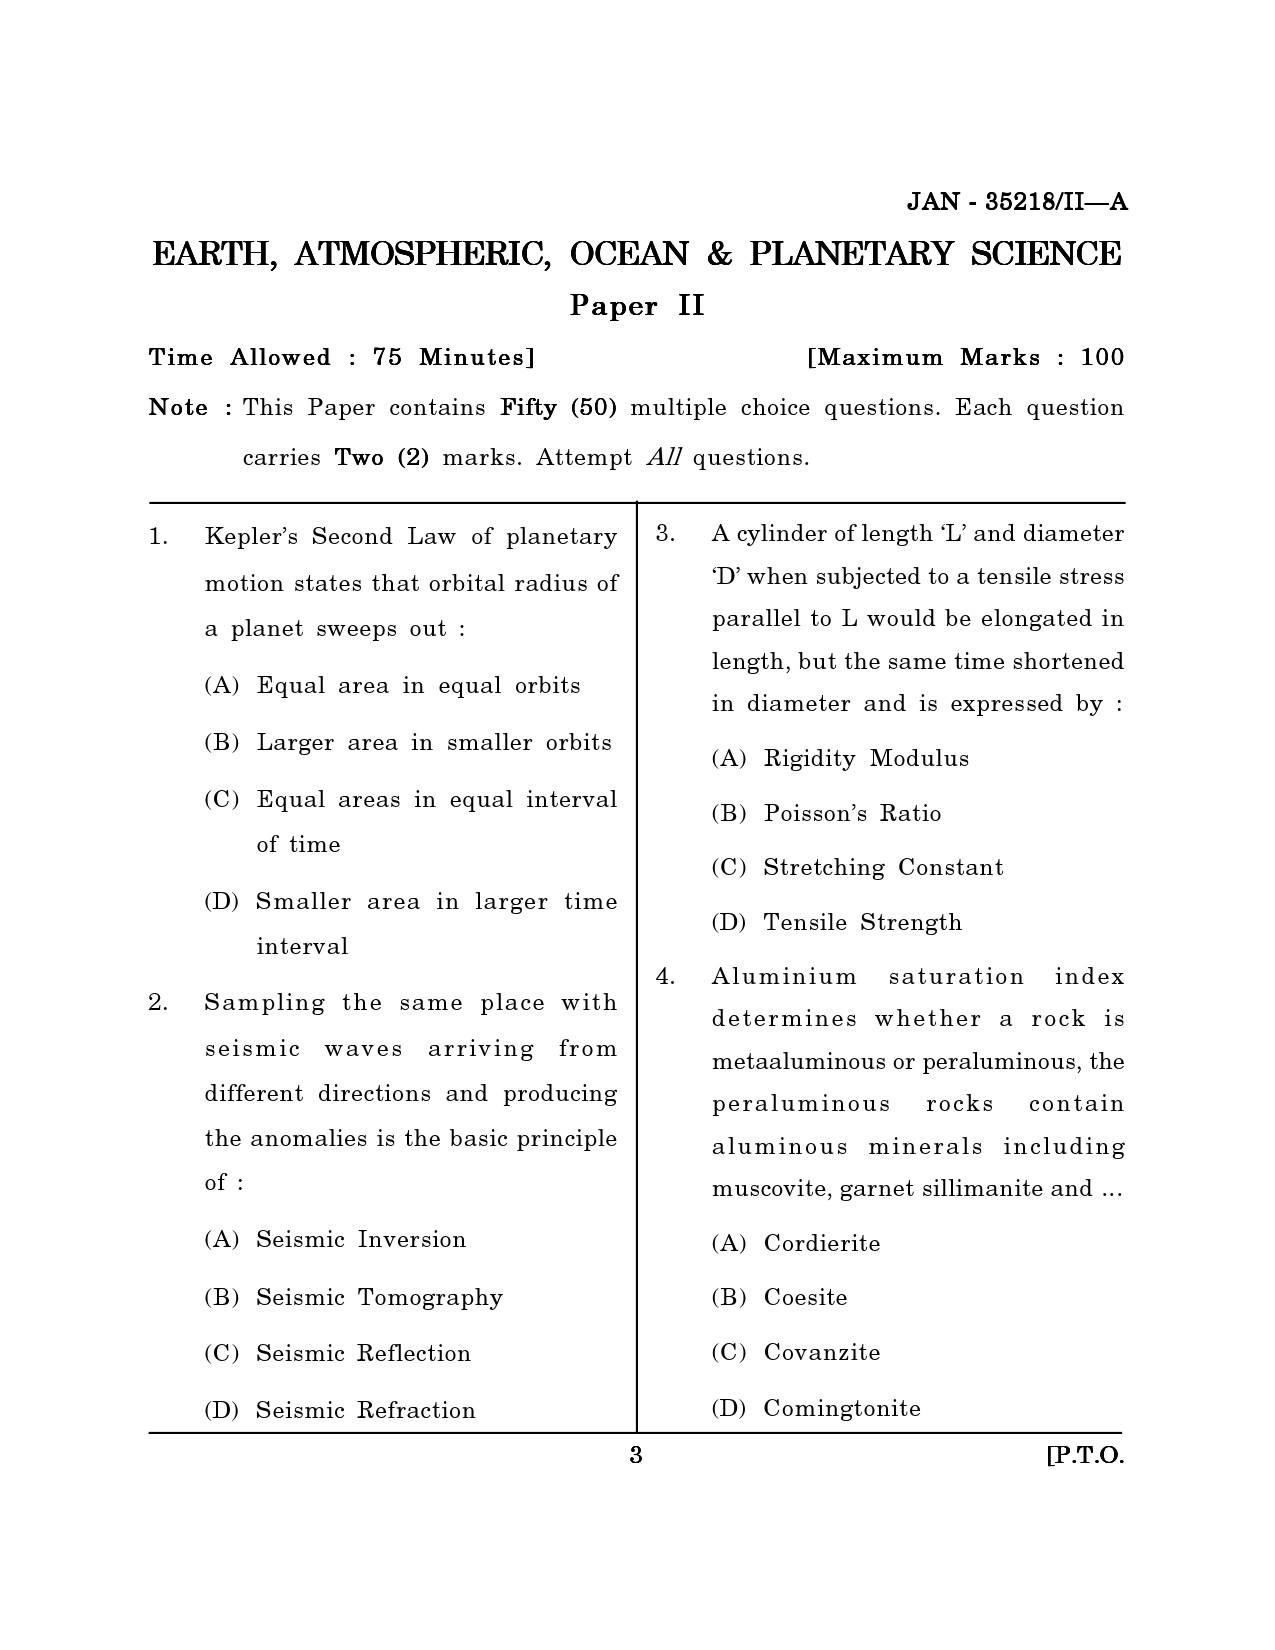 Maharashtra SET Earth Atmospheric Ocean Planetary Science Question Paper II January 2018 2